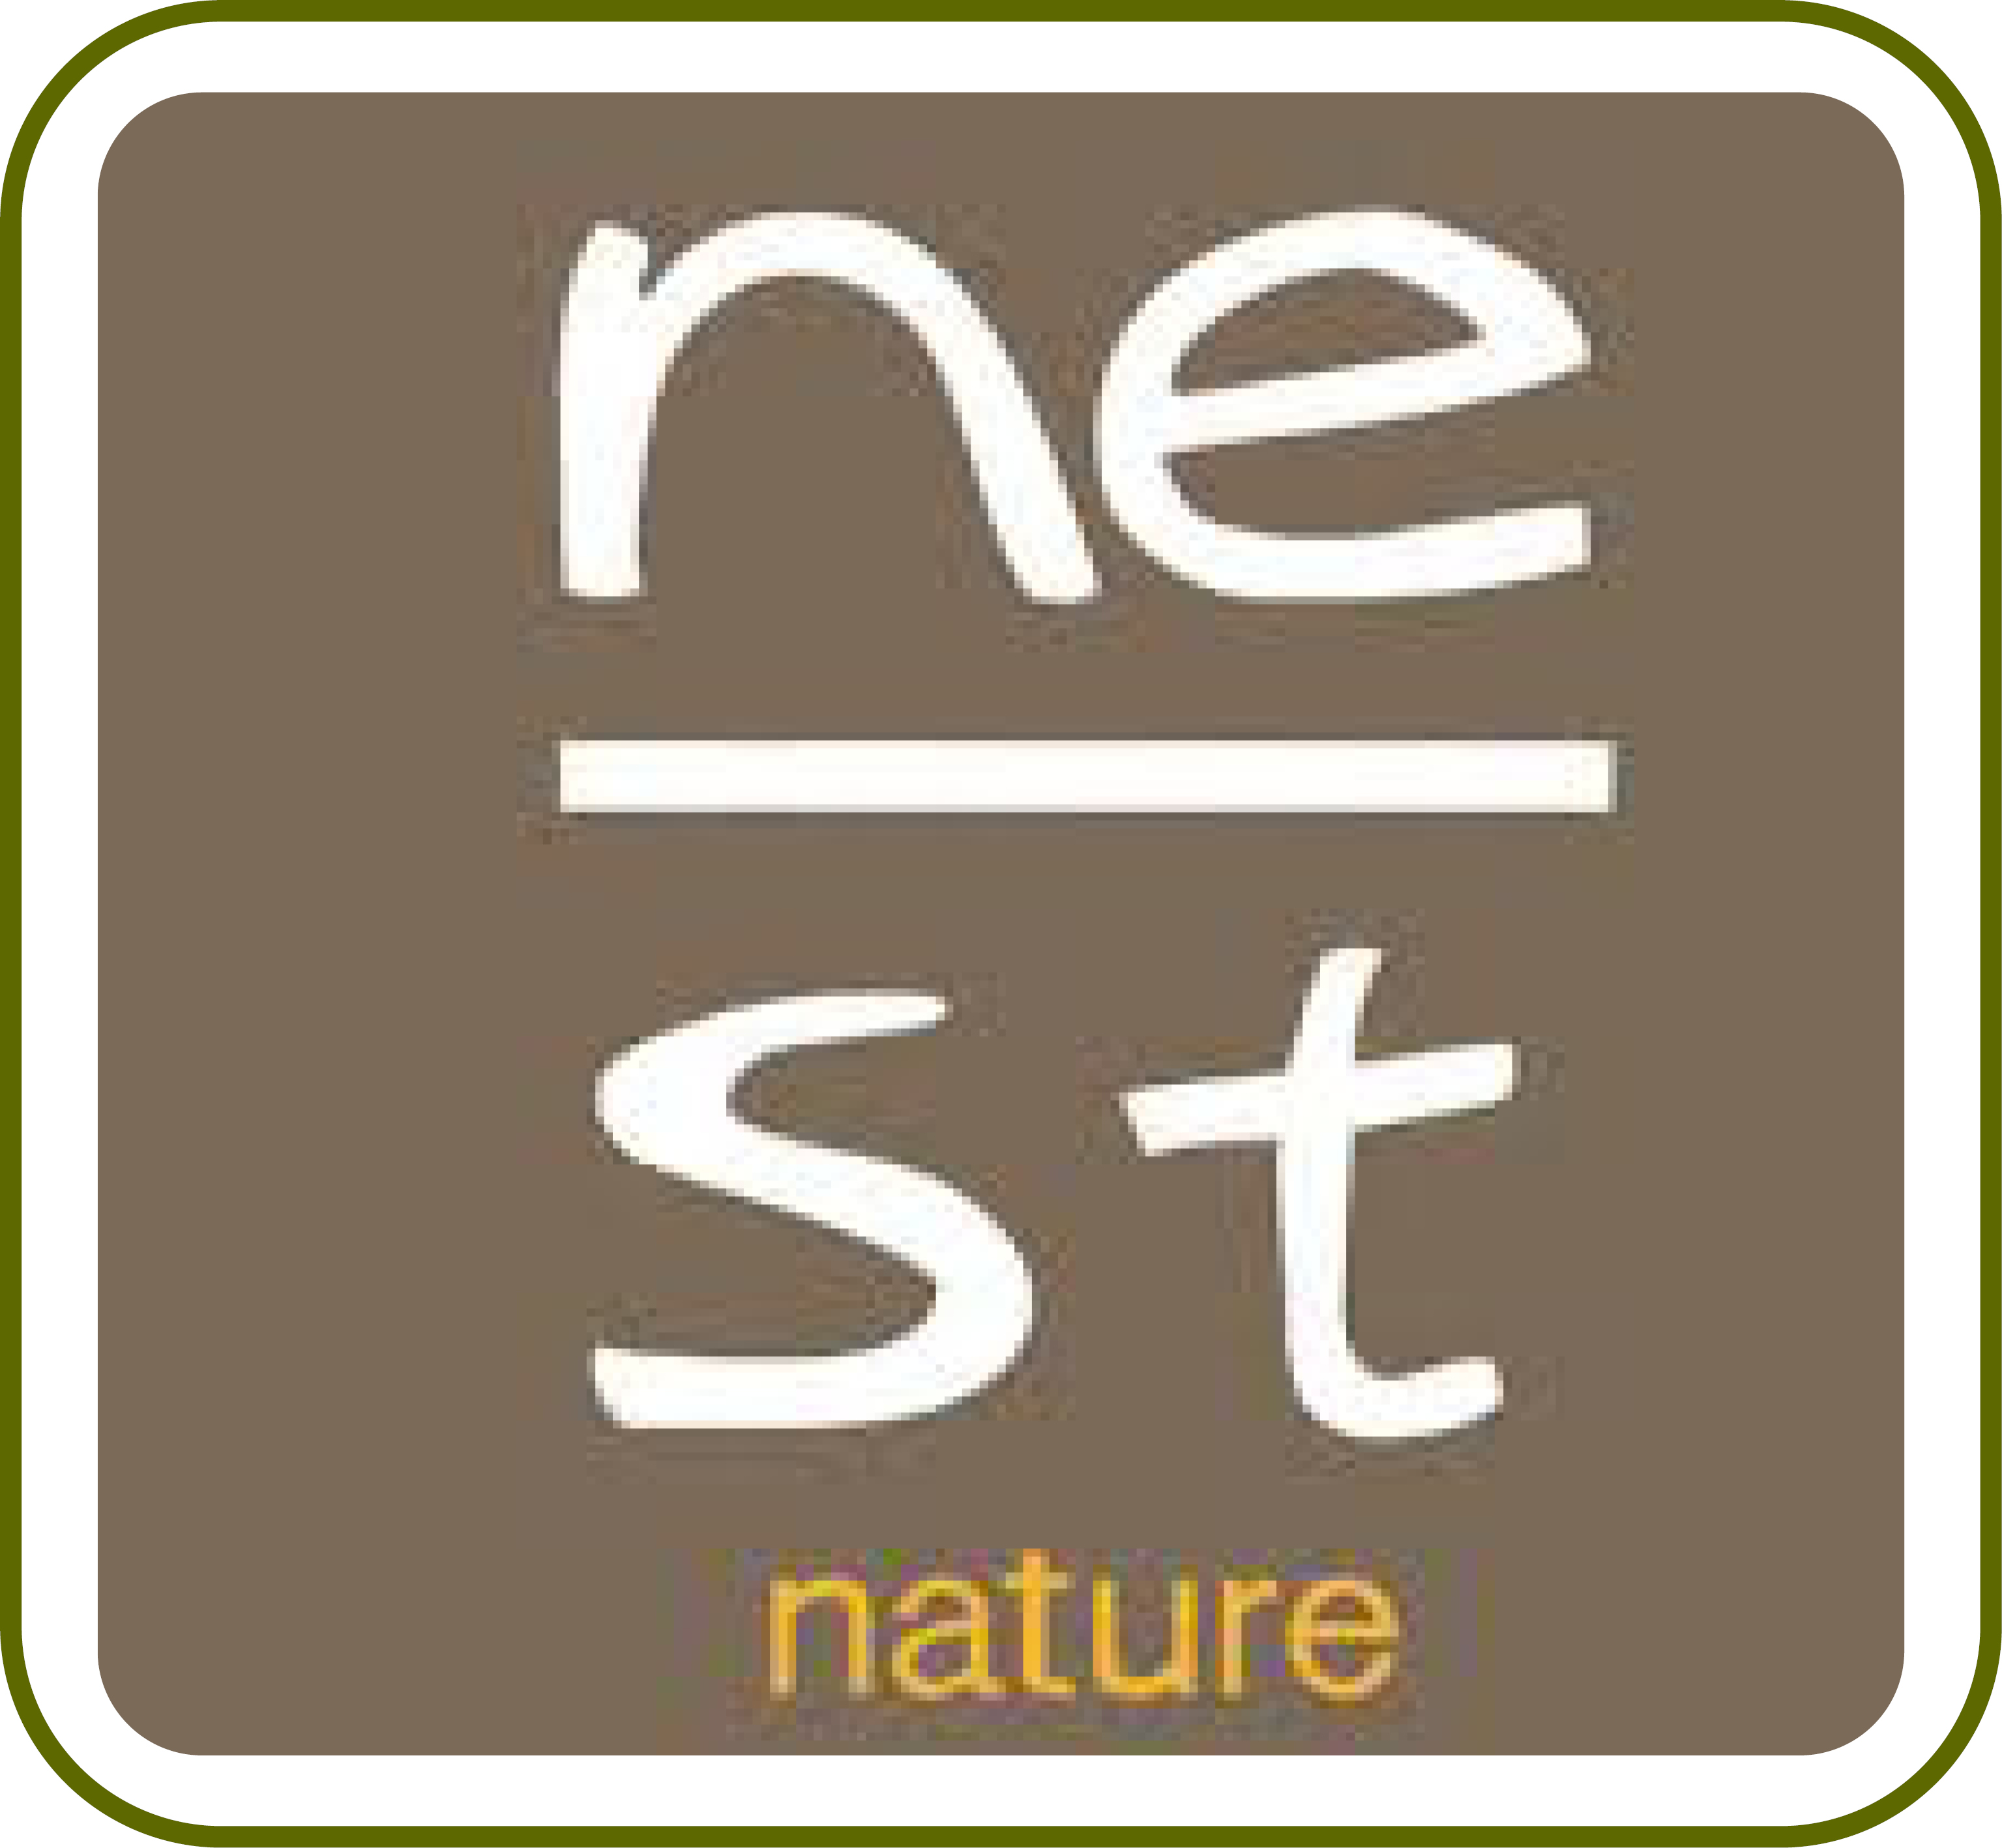 ERCOLINO-Hocker von nest nature